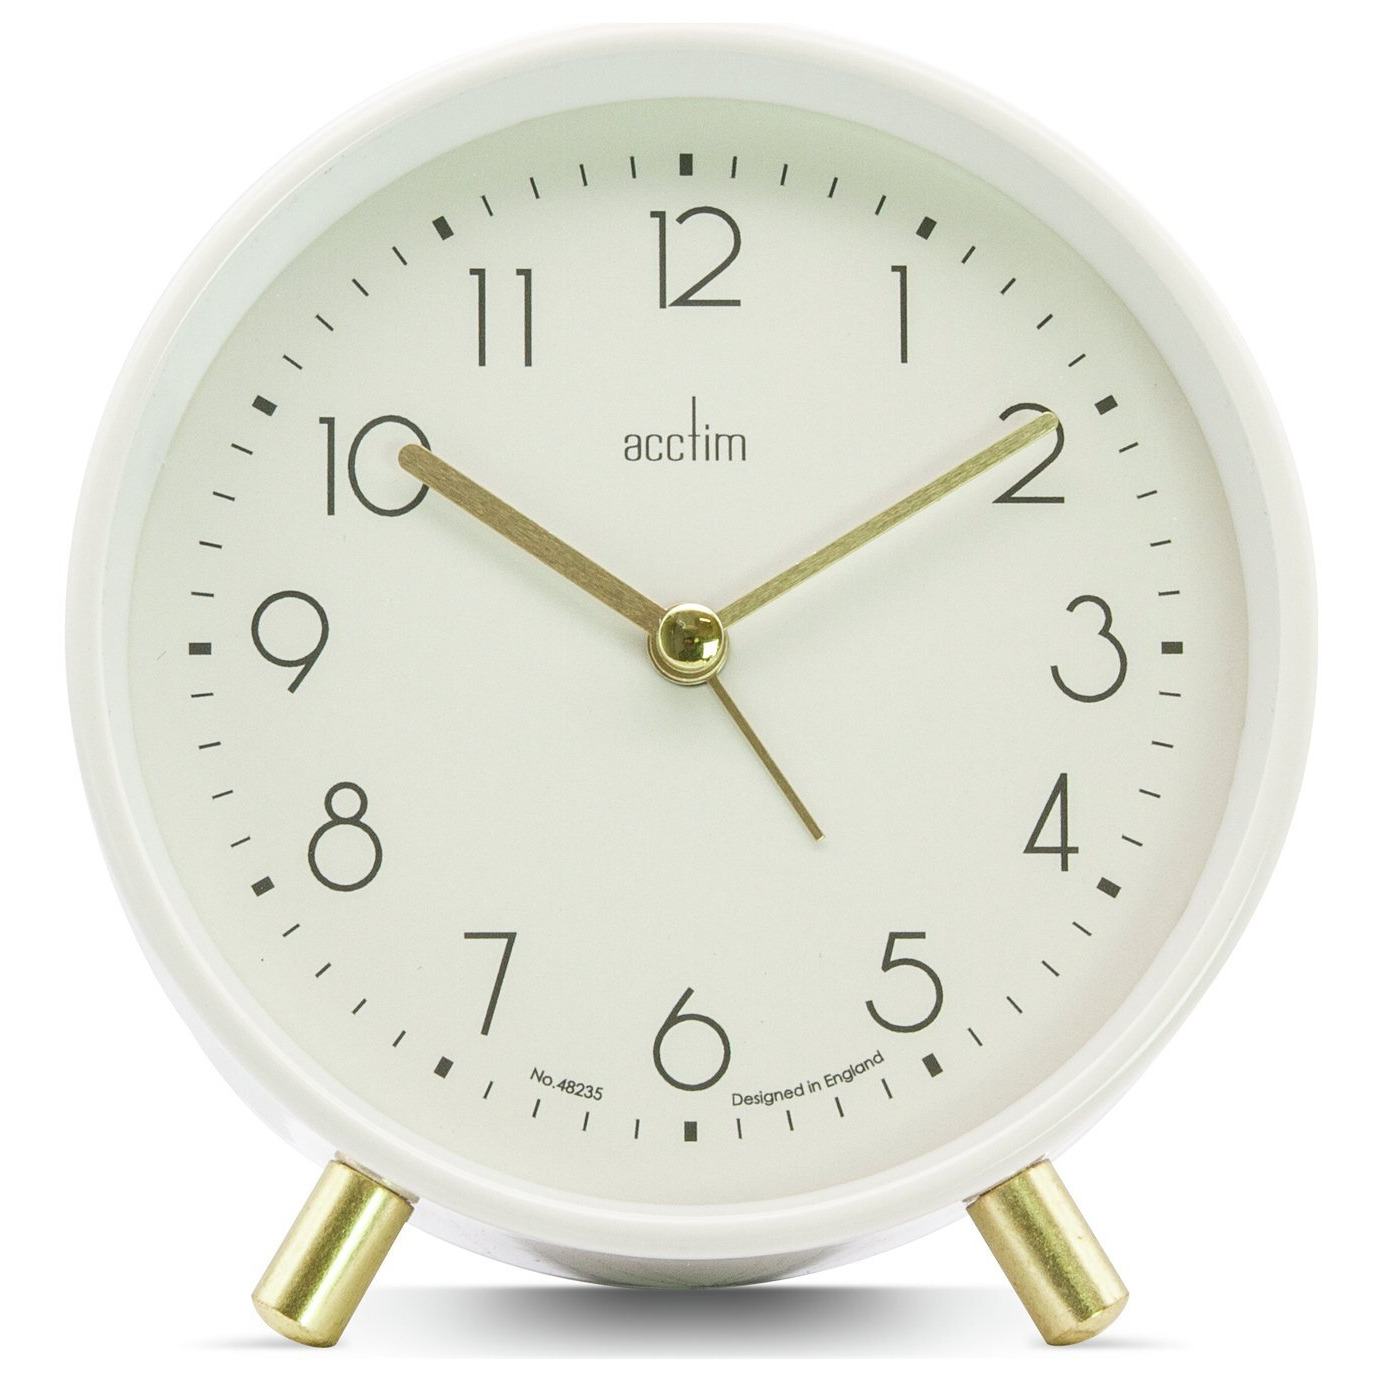 Acctim Fossen Metal Alarm Clock - White - image 1